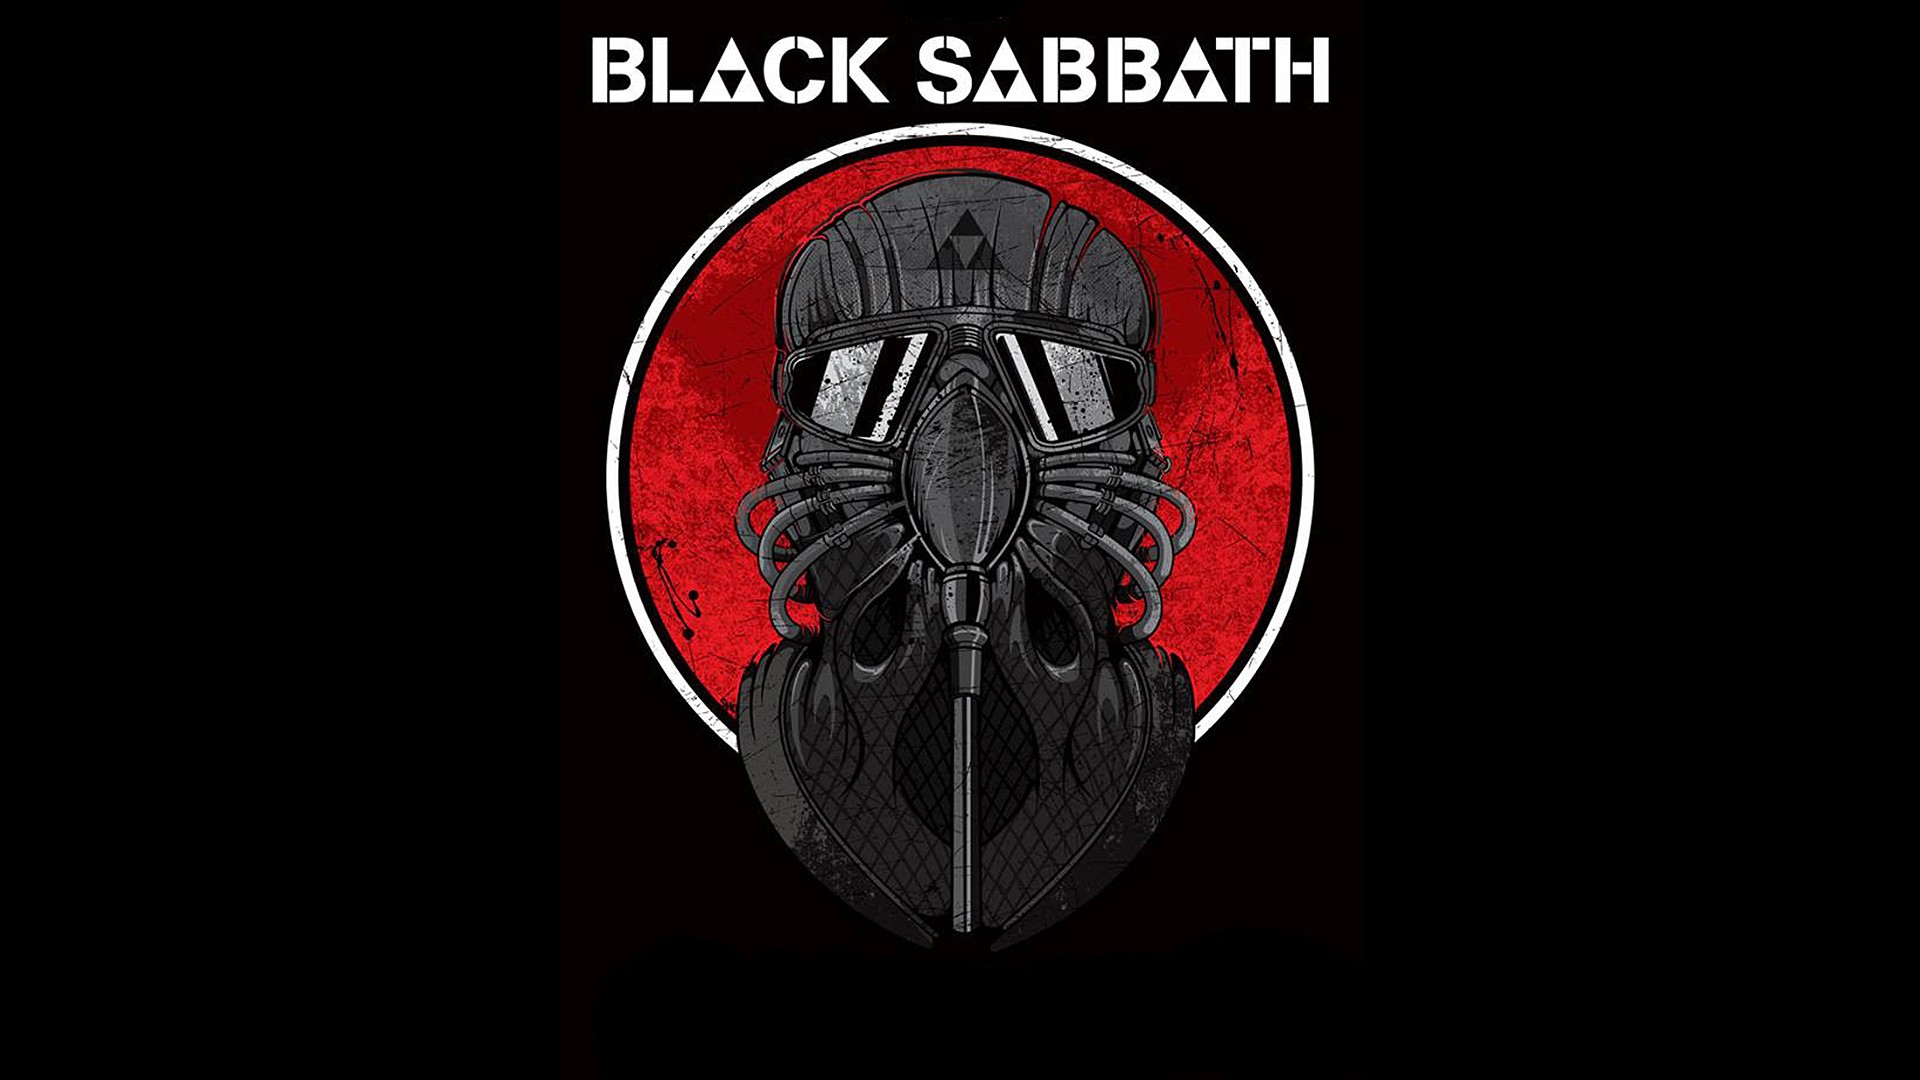 Music Black Sabbath Heavy Metal Band Text Simple Background Black Background 1920x1080